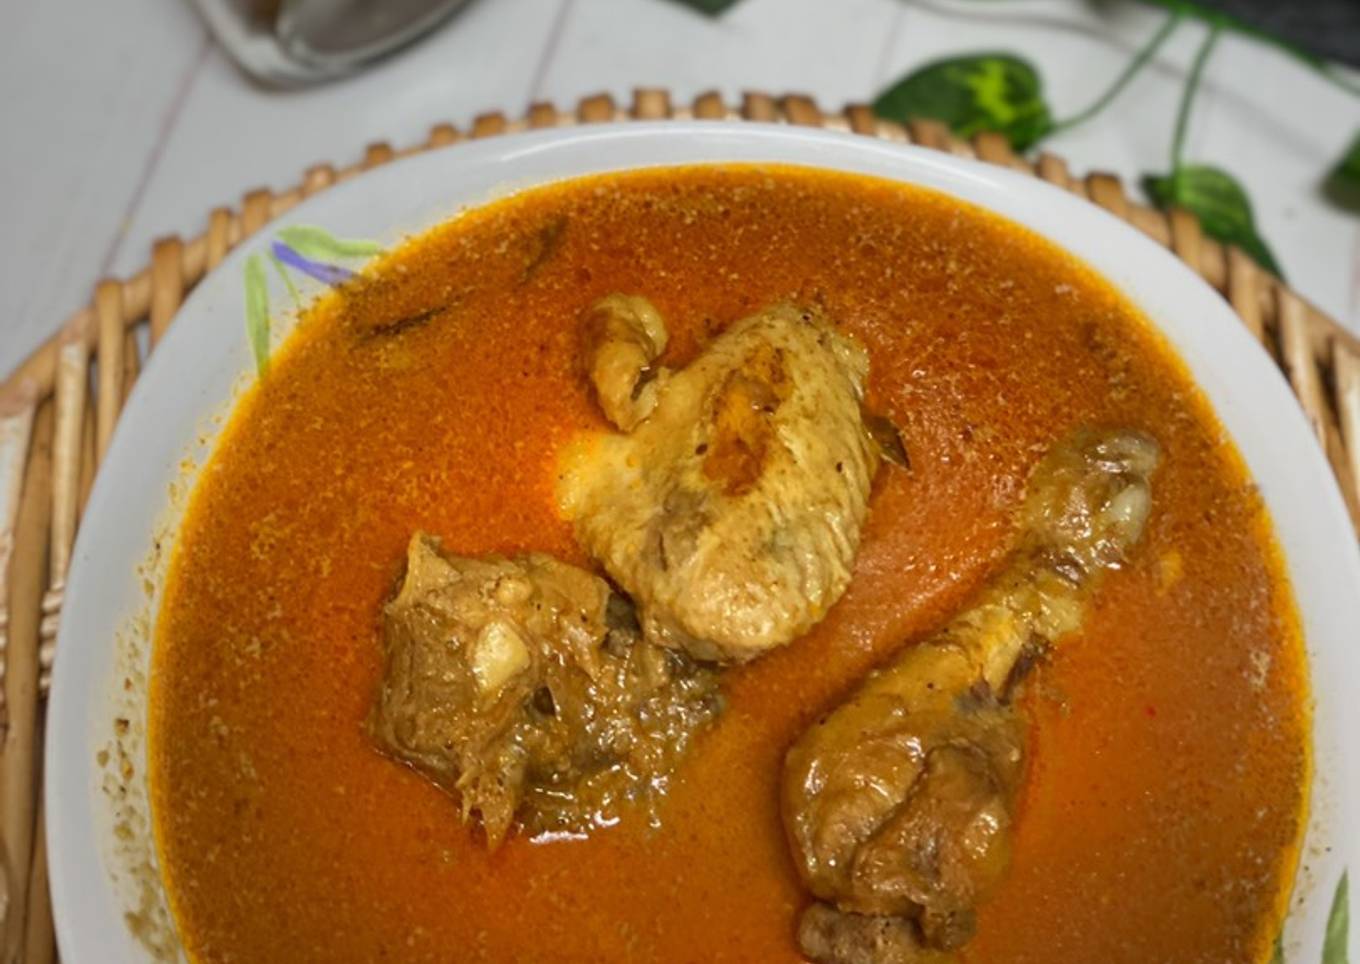 Kukul mas curry @ Sri lankan 🇱🇰 kari ayam